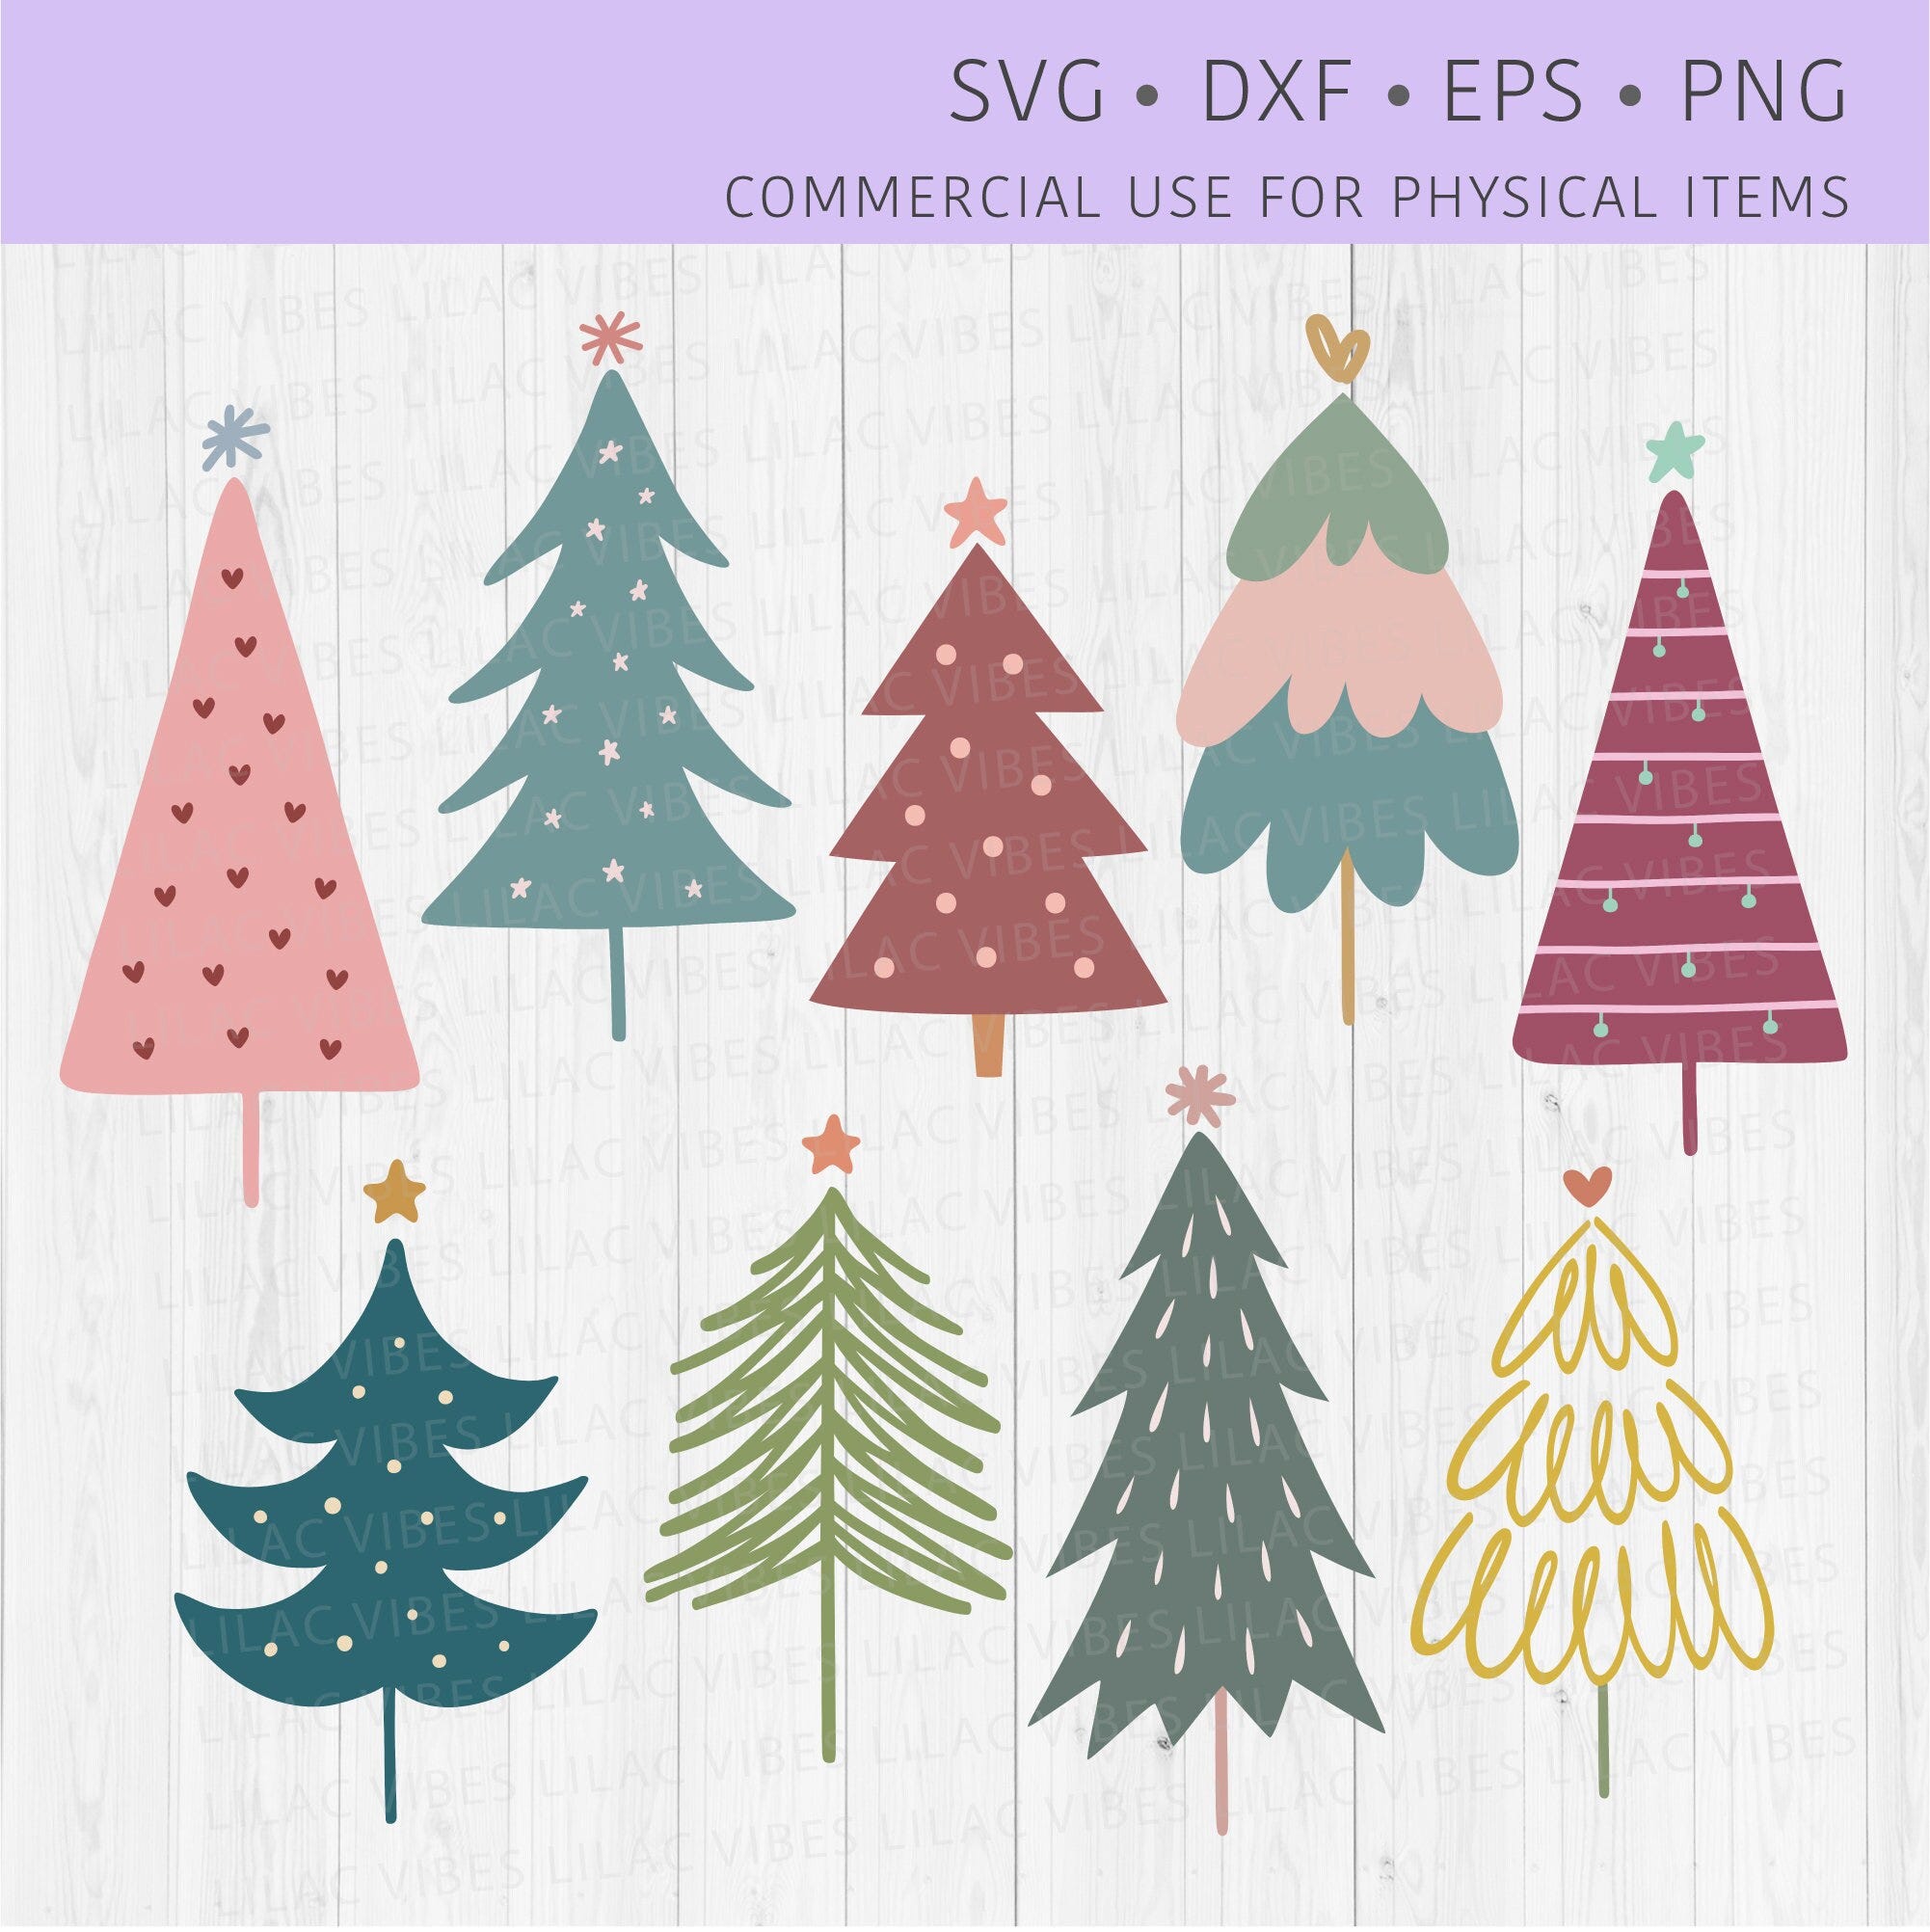 Boho Christmas Trees SVG Bundle, Merry Christmas Trees PNG Clipart, Christmas Tree SVG Cut Files for Cricut Silhouette, Dxf, Eps